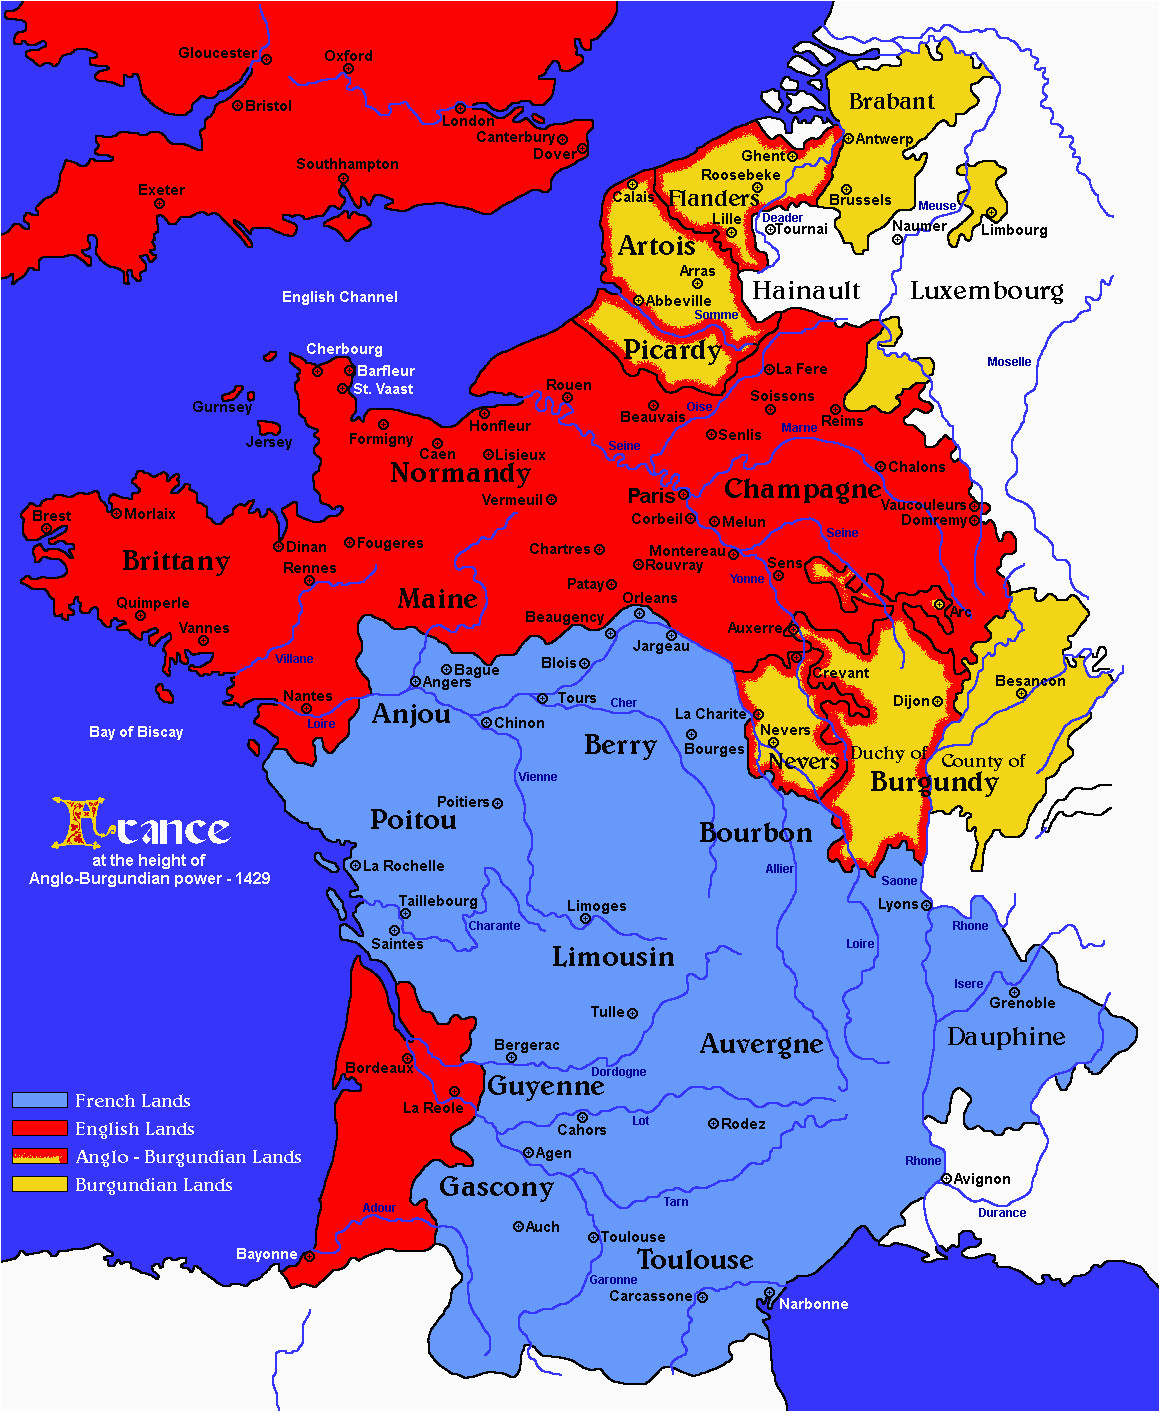 1429 french english burgundian and anglo burgundian lands